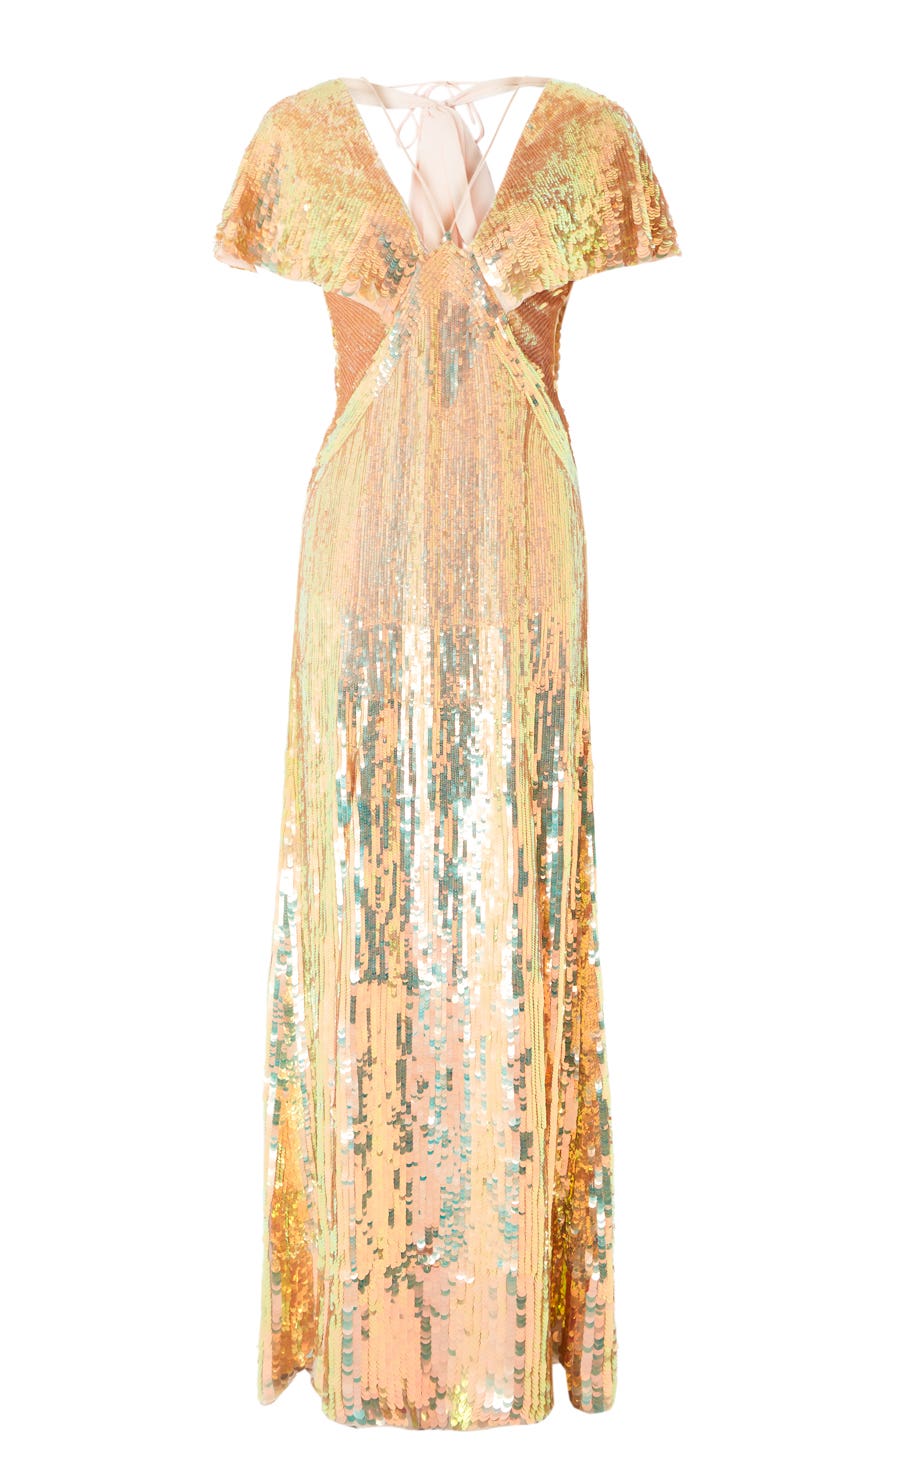 Bardot Dress - Iridescent Gold